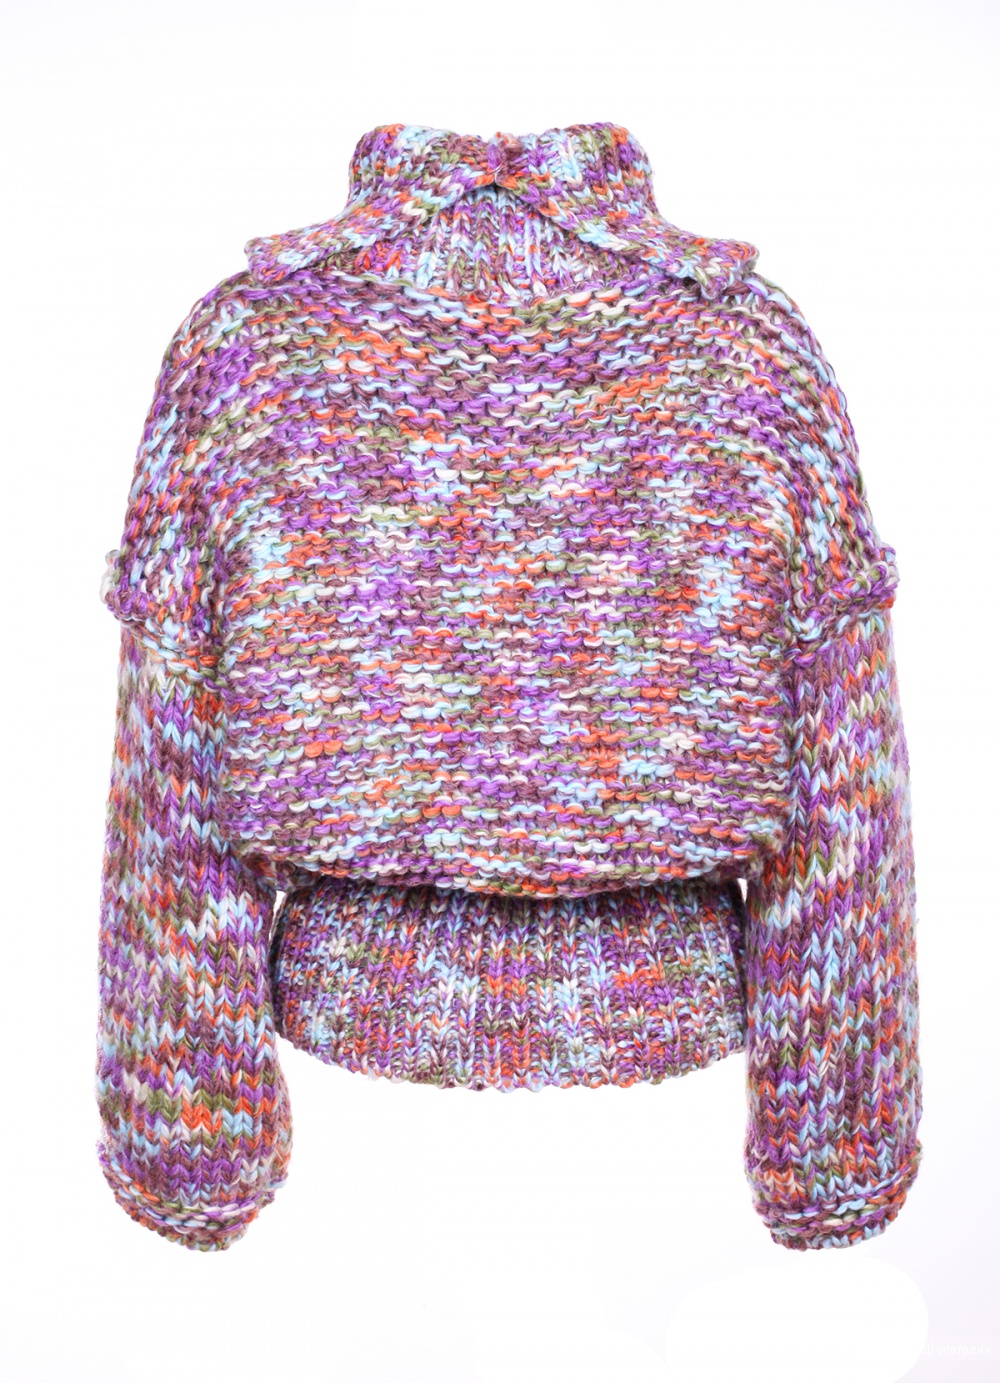 Шерстяной свитер Have Riсe, размер free size